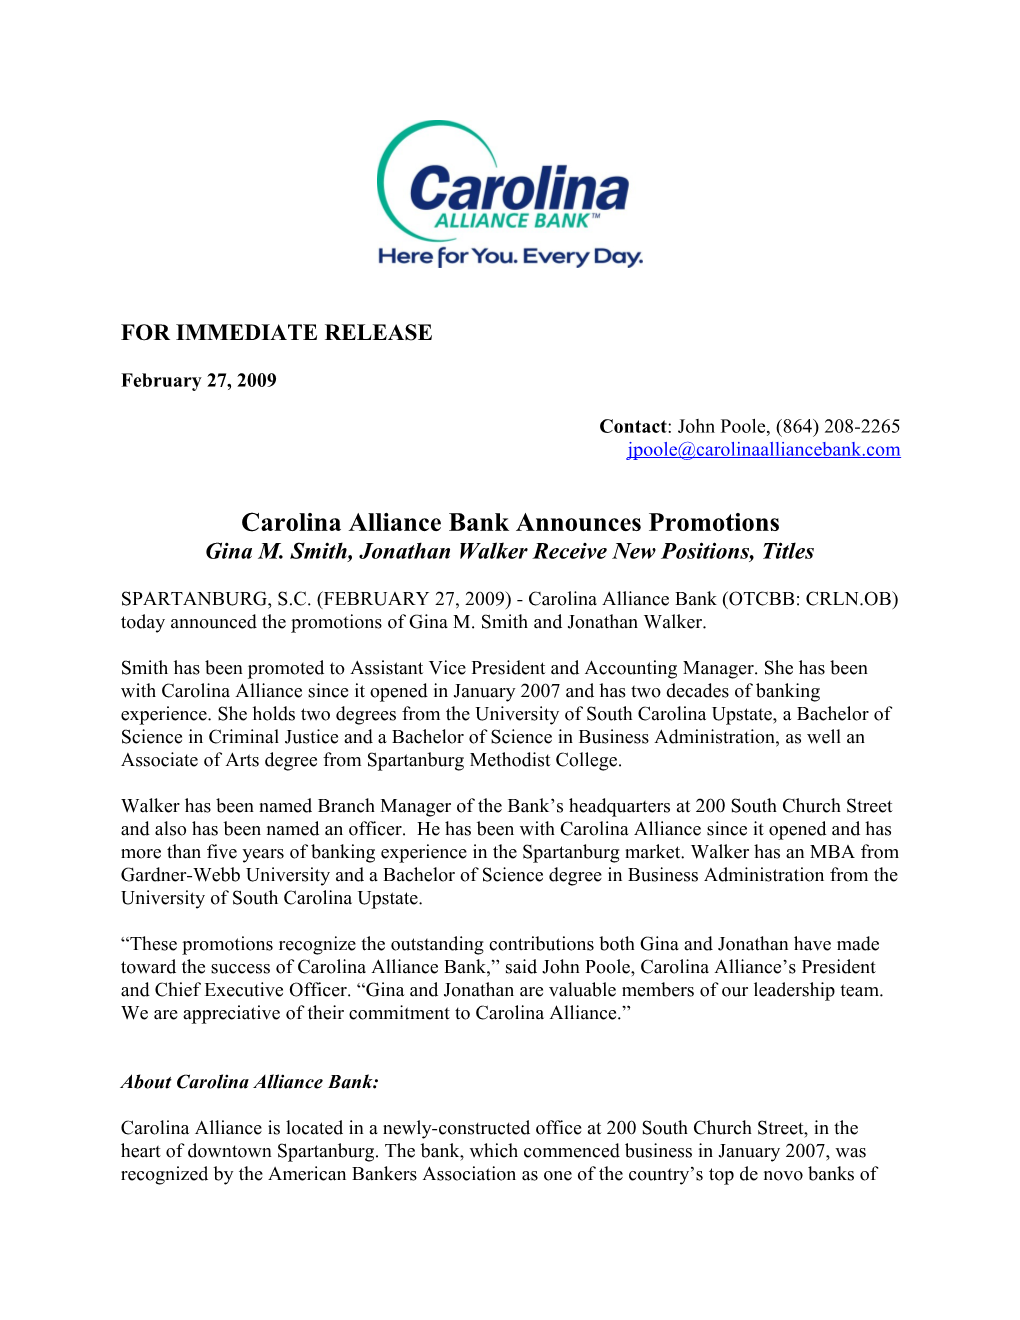 Carolina Alliance Bank Announces Promotions